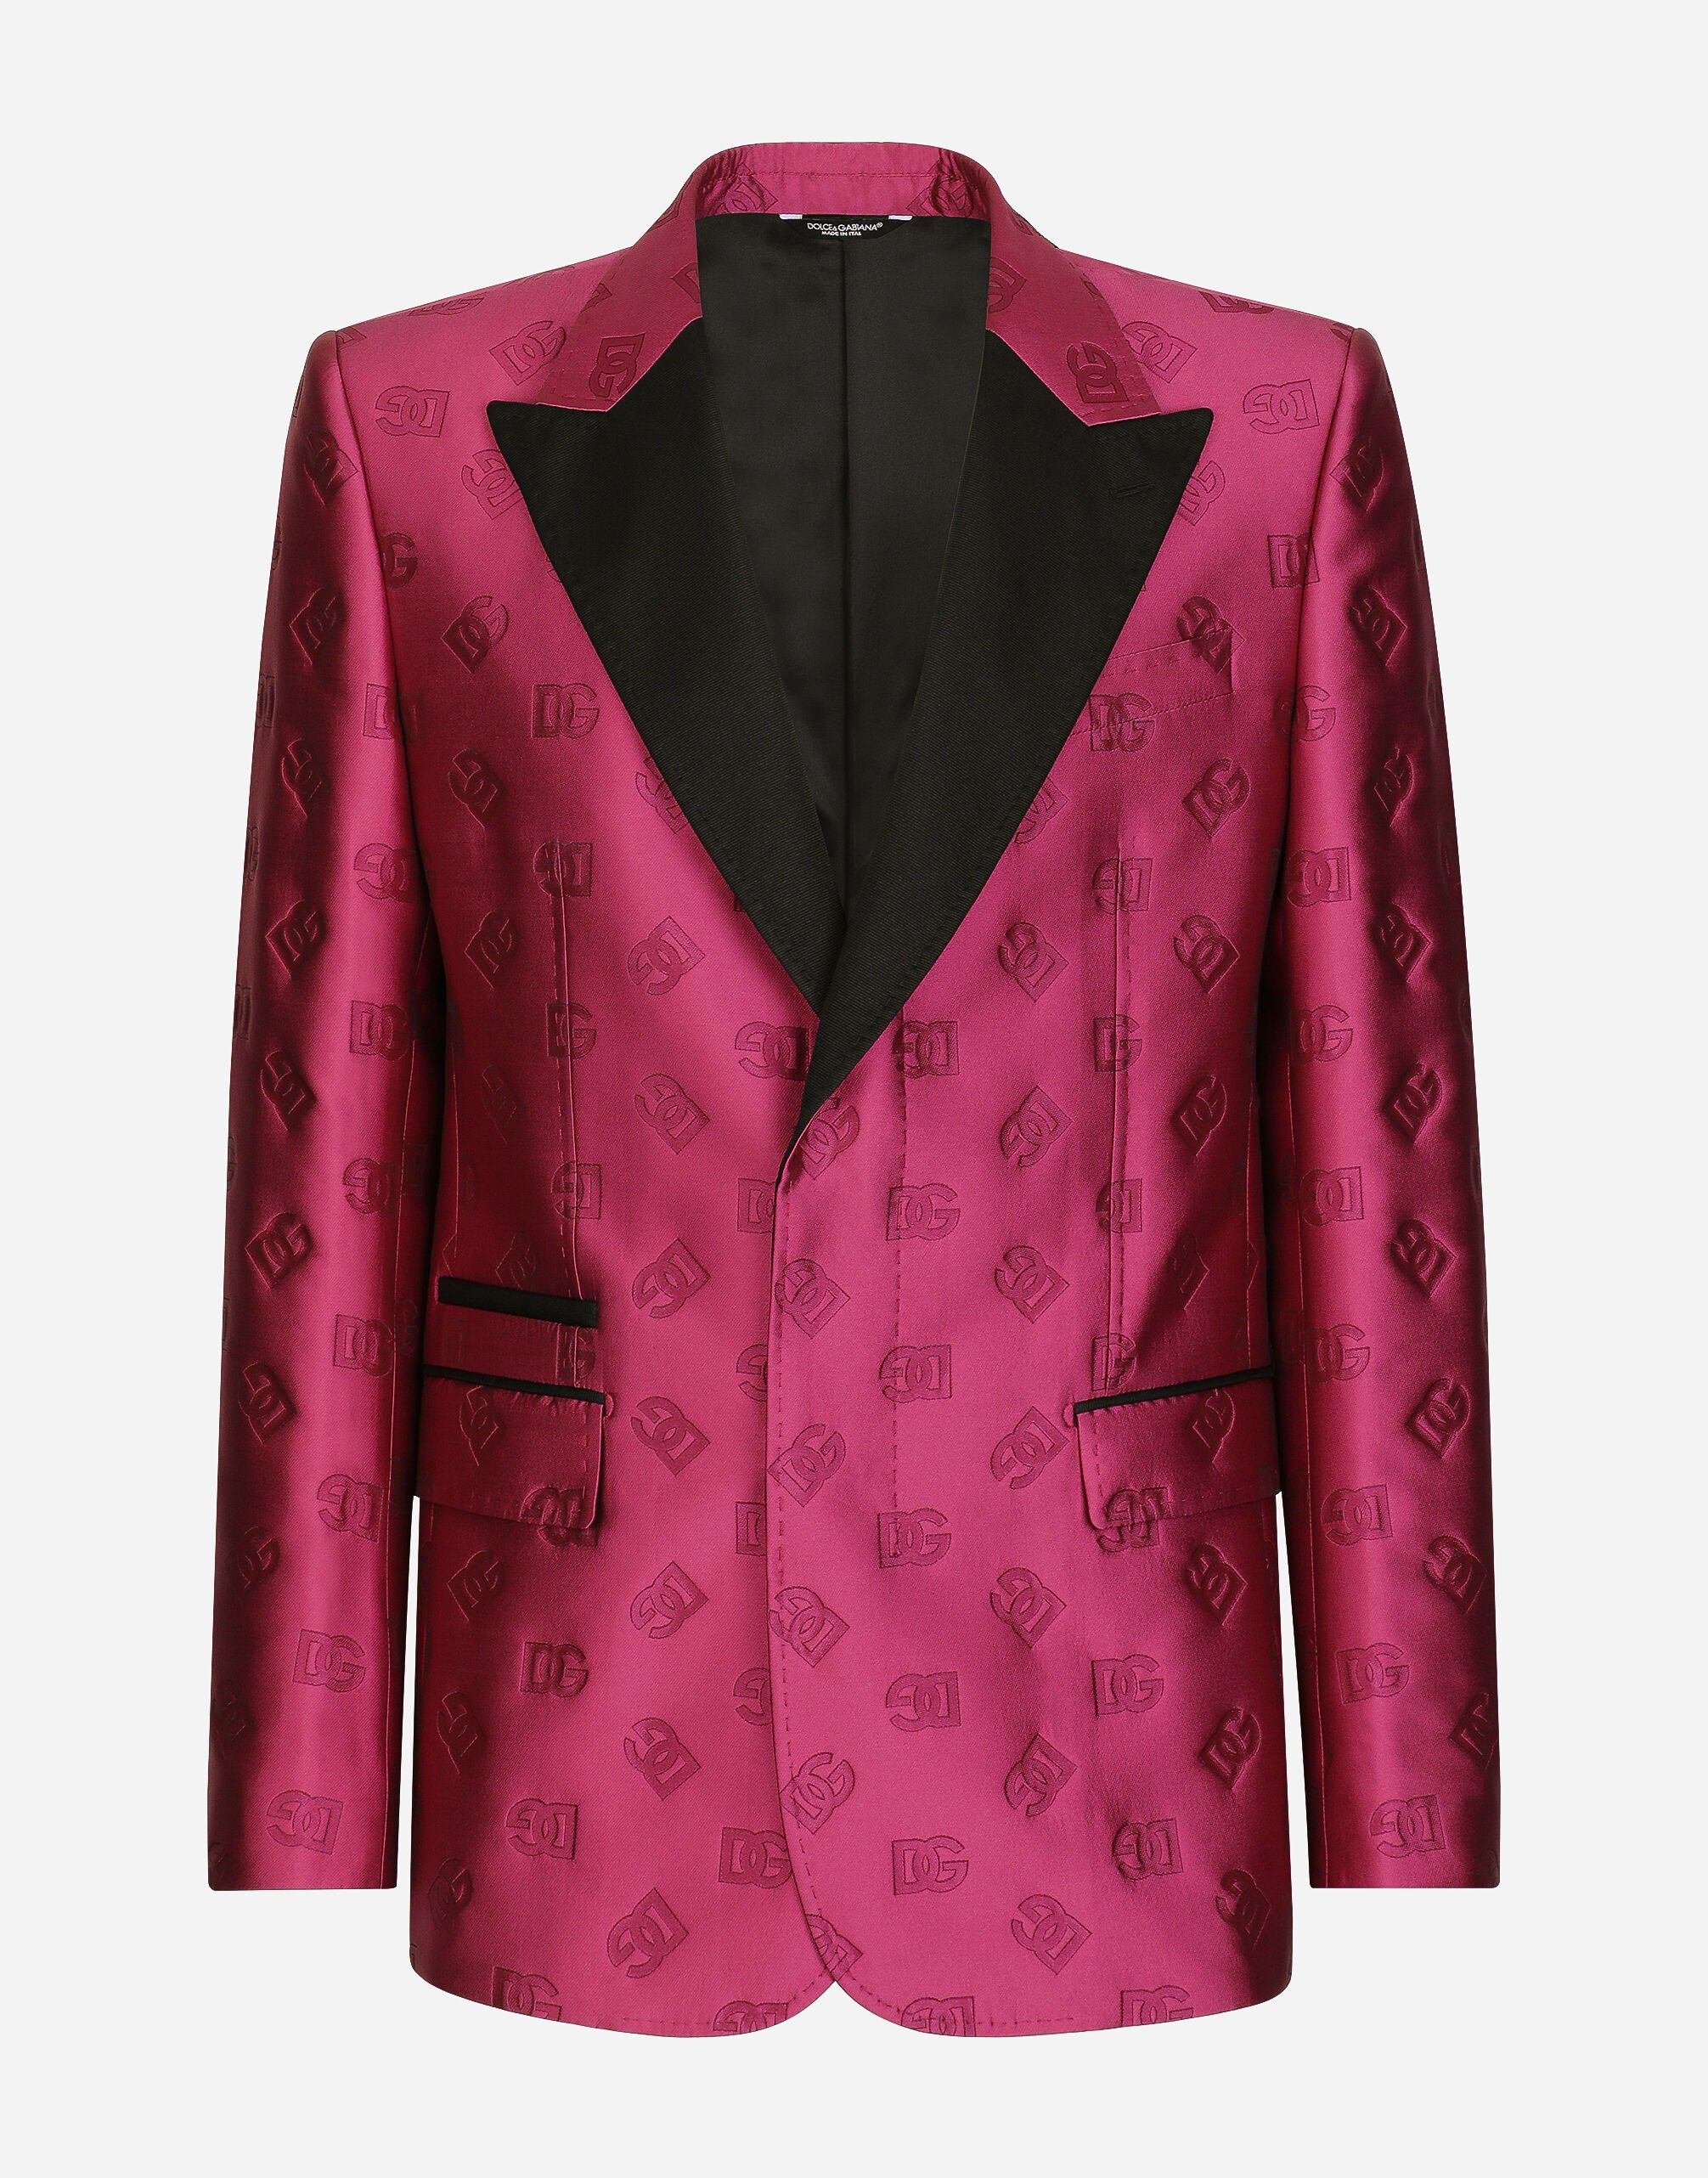 Dolce & Gabbana Single-breasted Sicilia-fit tuxedo jacket with DG jacquard detailing Gold L54I80G7K2T